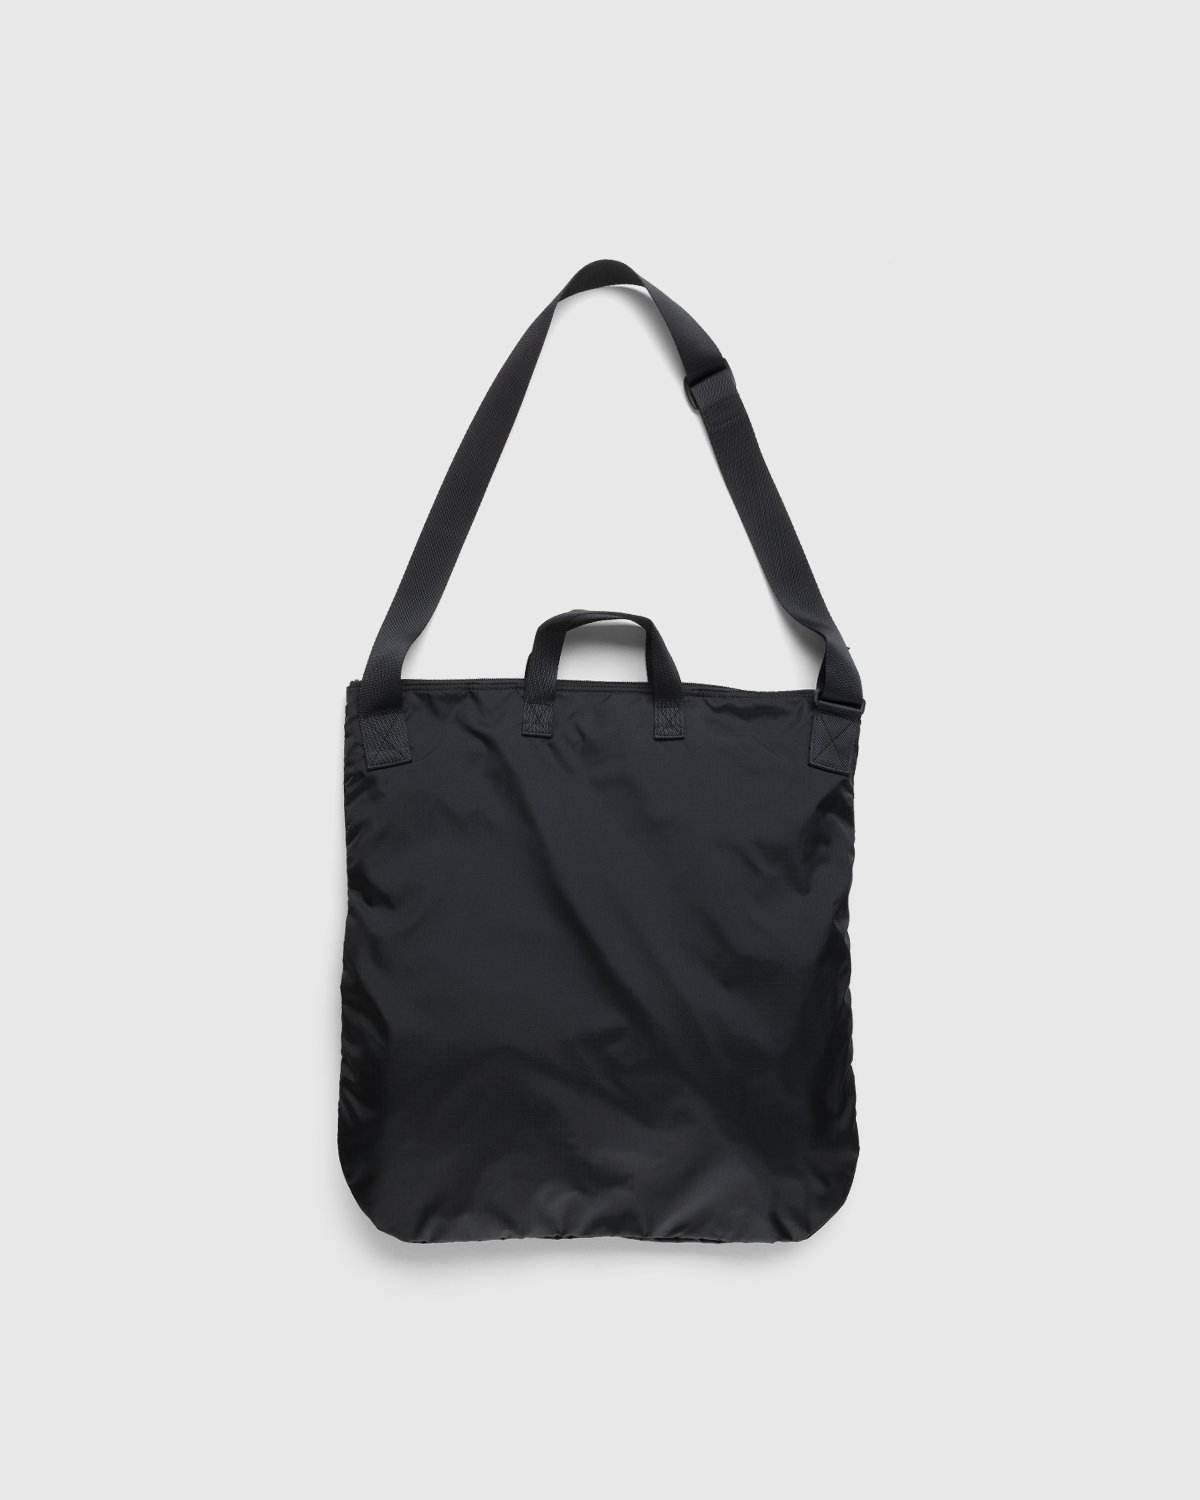 Porter-Yoshida & Co. - Flex 2-Way Helmet Bag Black - Accessories - Black - Image 2